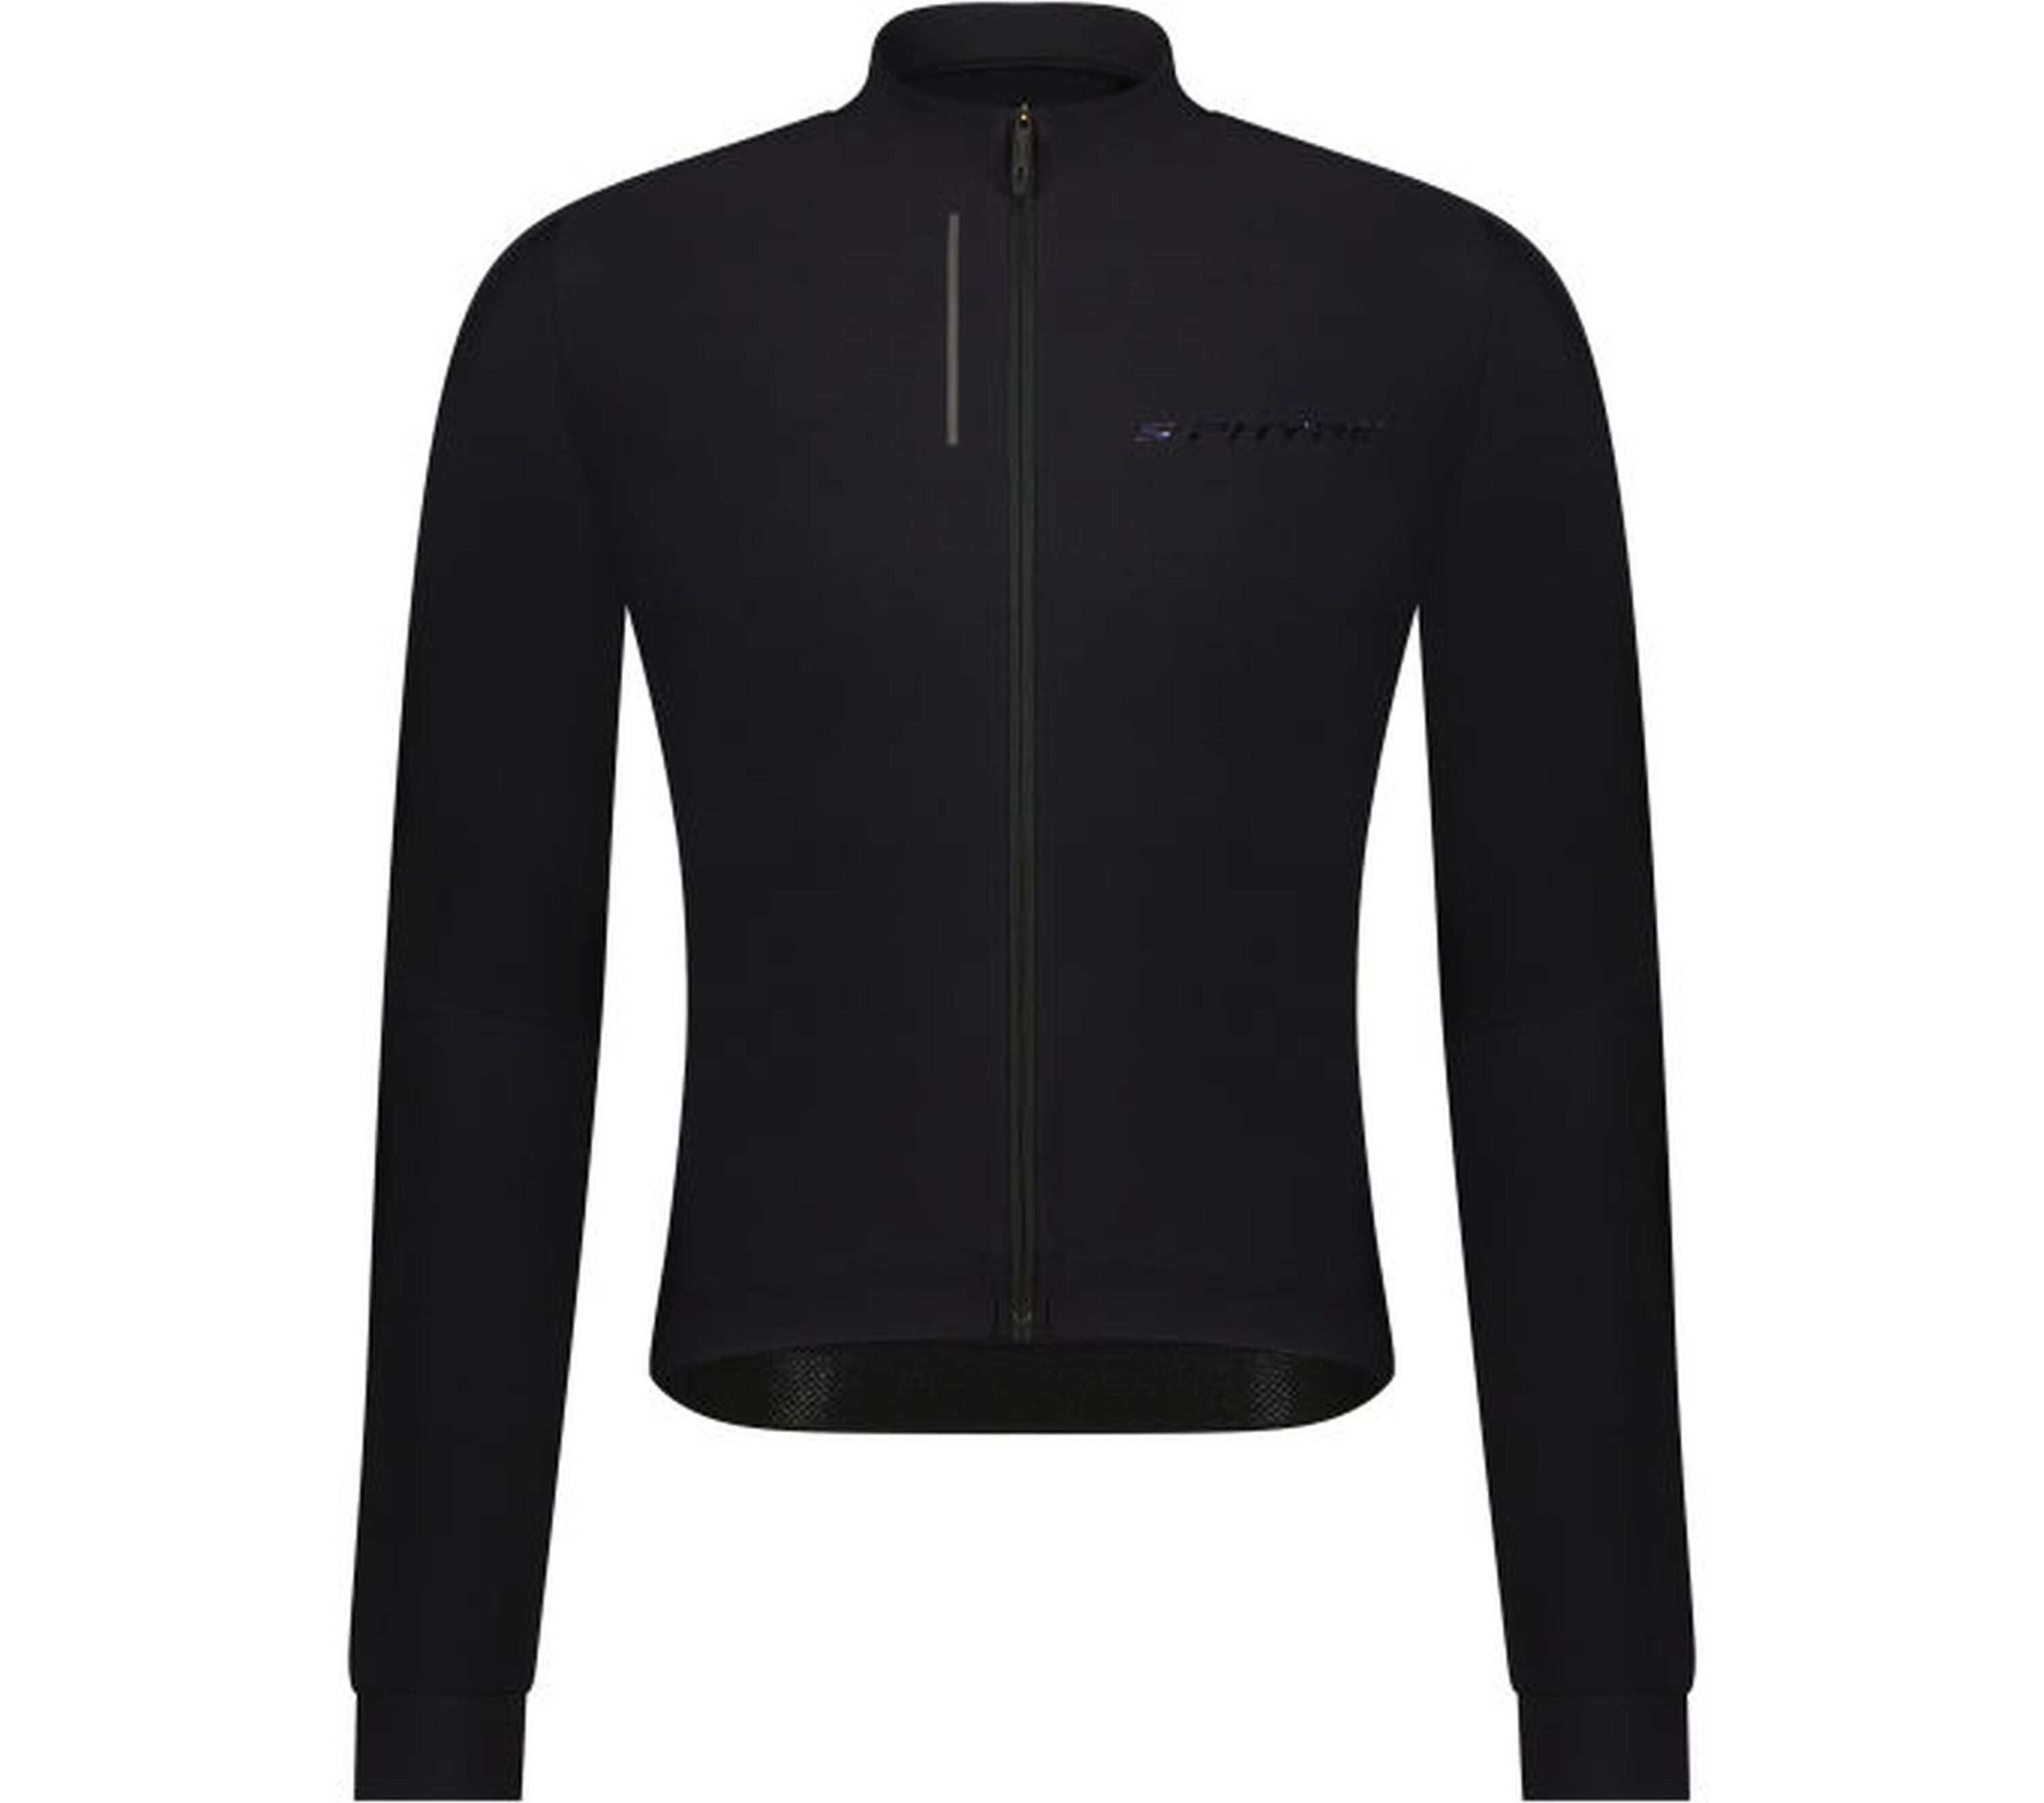 Рубашка SHIMANO Thermal Long Sleeves Jersey S PHYRE, черный spot pattern winter women long sleeves thermal fleece cycling jersey suit triathlon bike team sport jersey